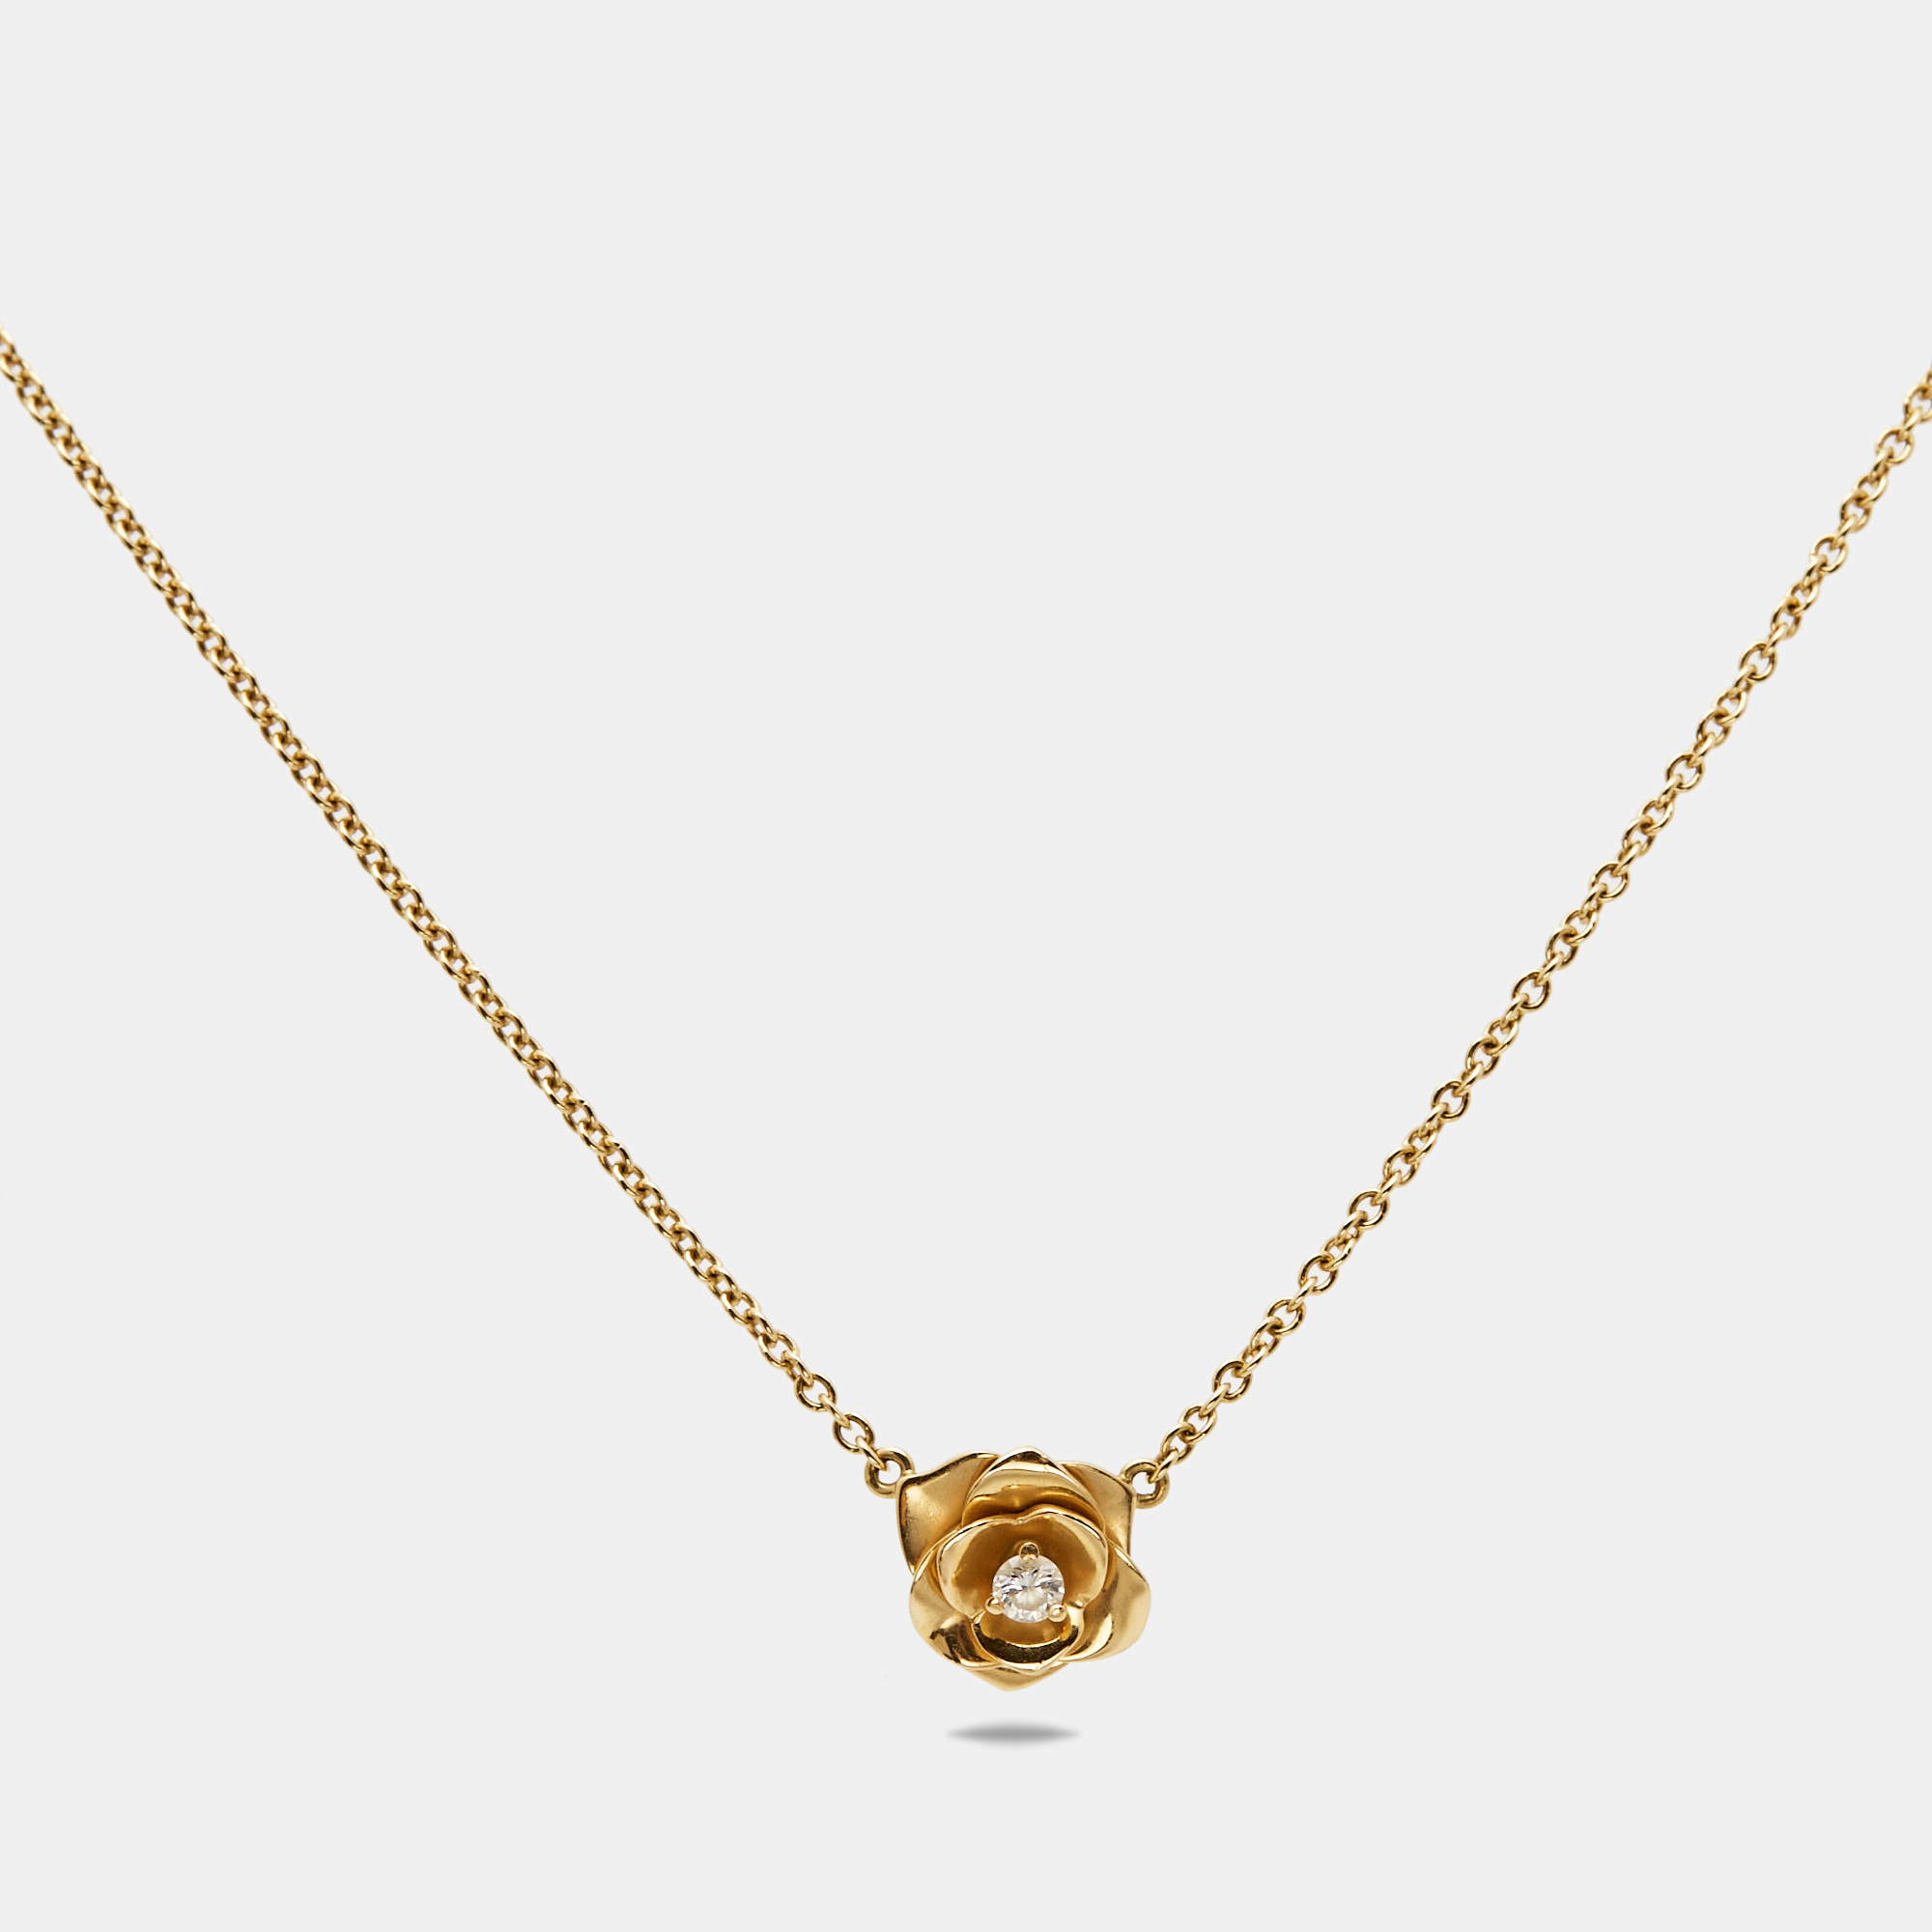 Chopard piaget rose diamond 18k rose gold pendant necklace